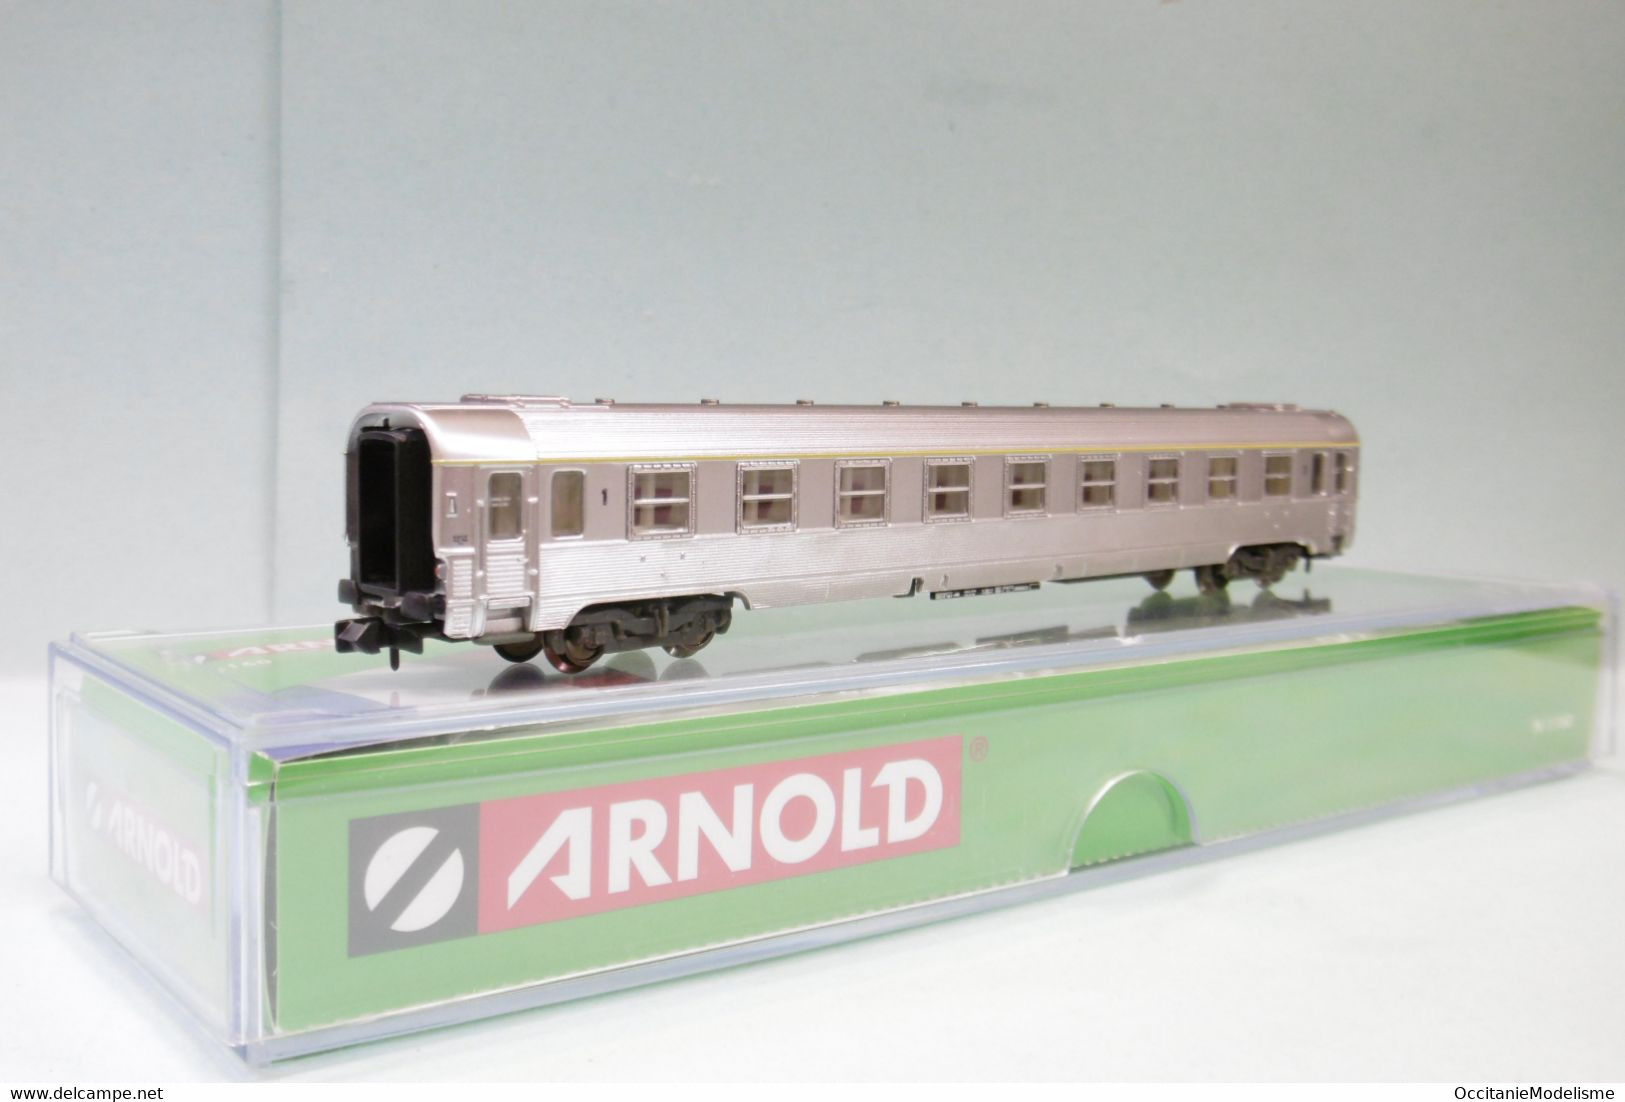 Arnold - Voiture DEV INOX A9 1ère Classe SNCF ép. III Réf. HN4323 Neuf N 1/160 - Voitures Voyageurs